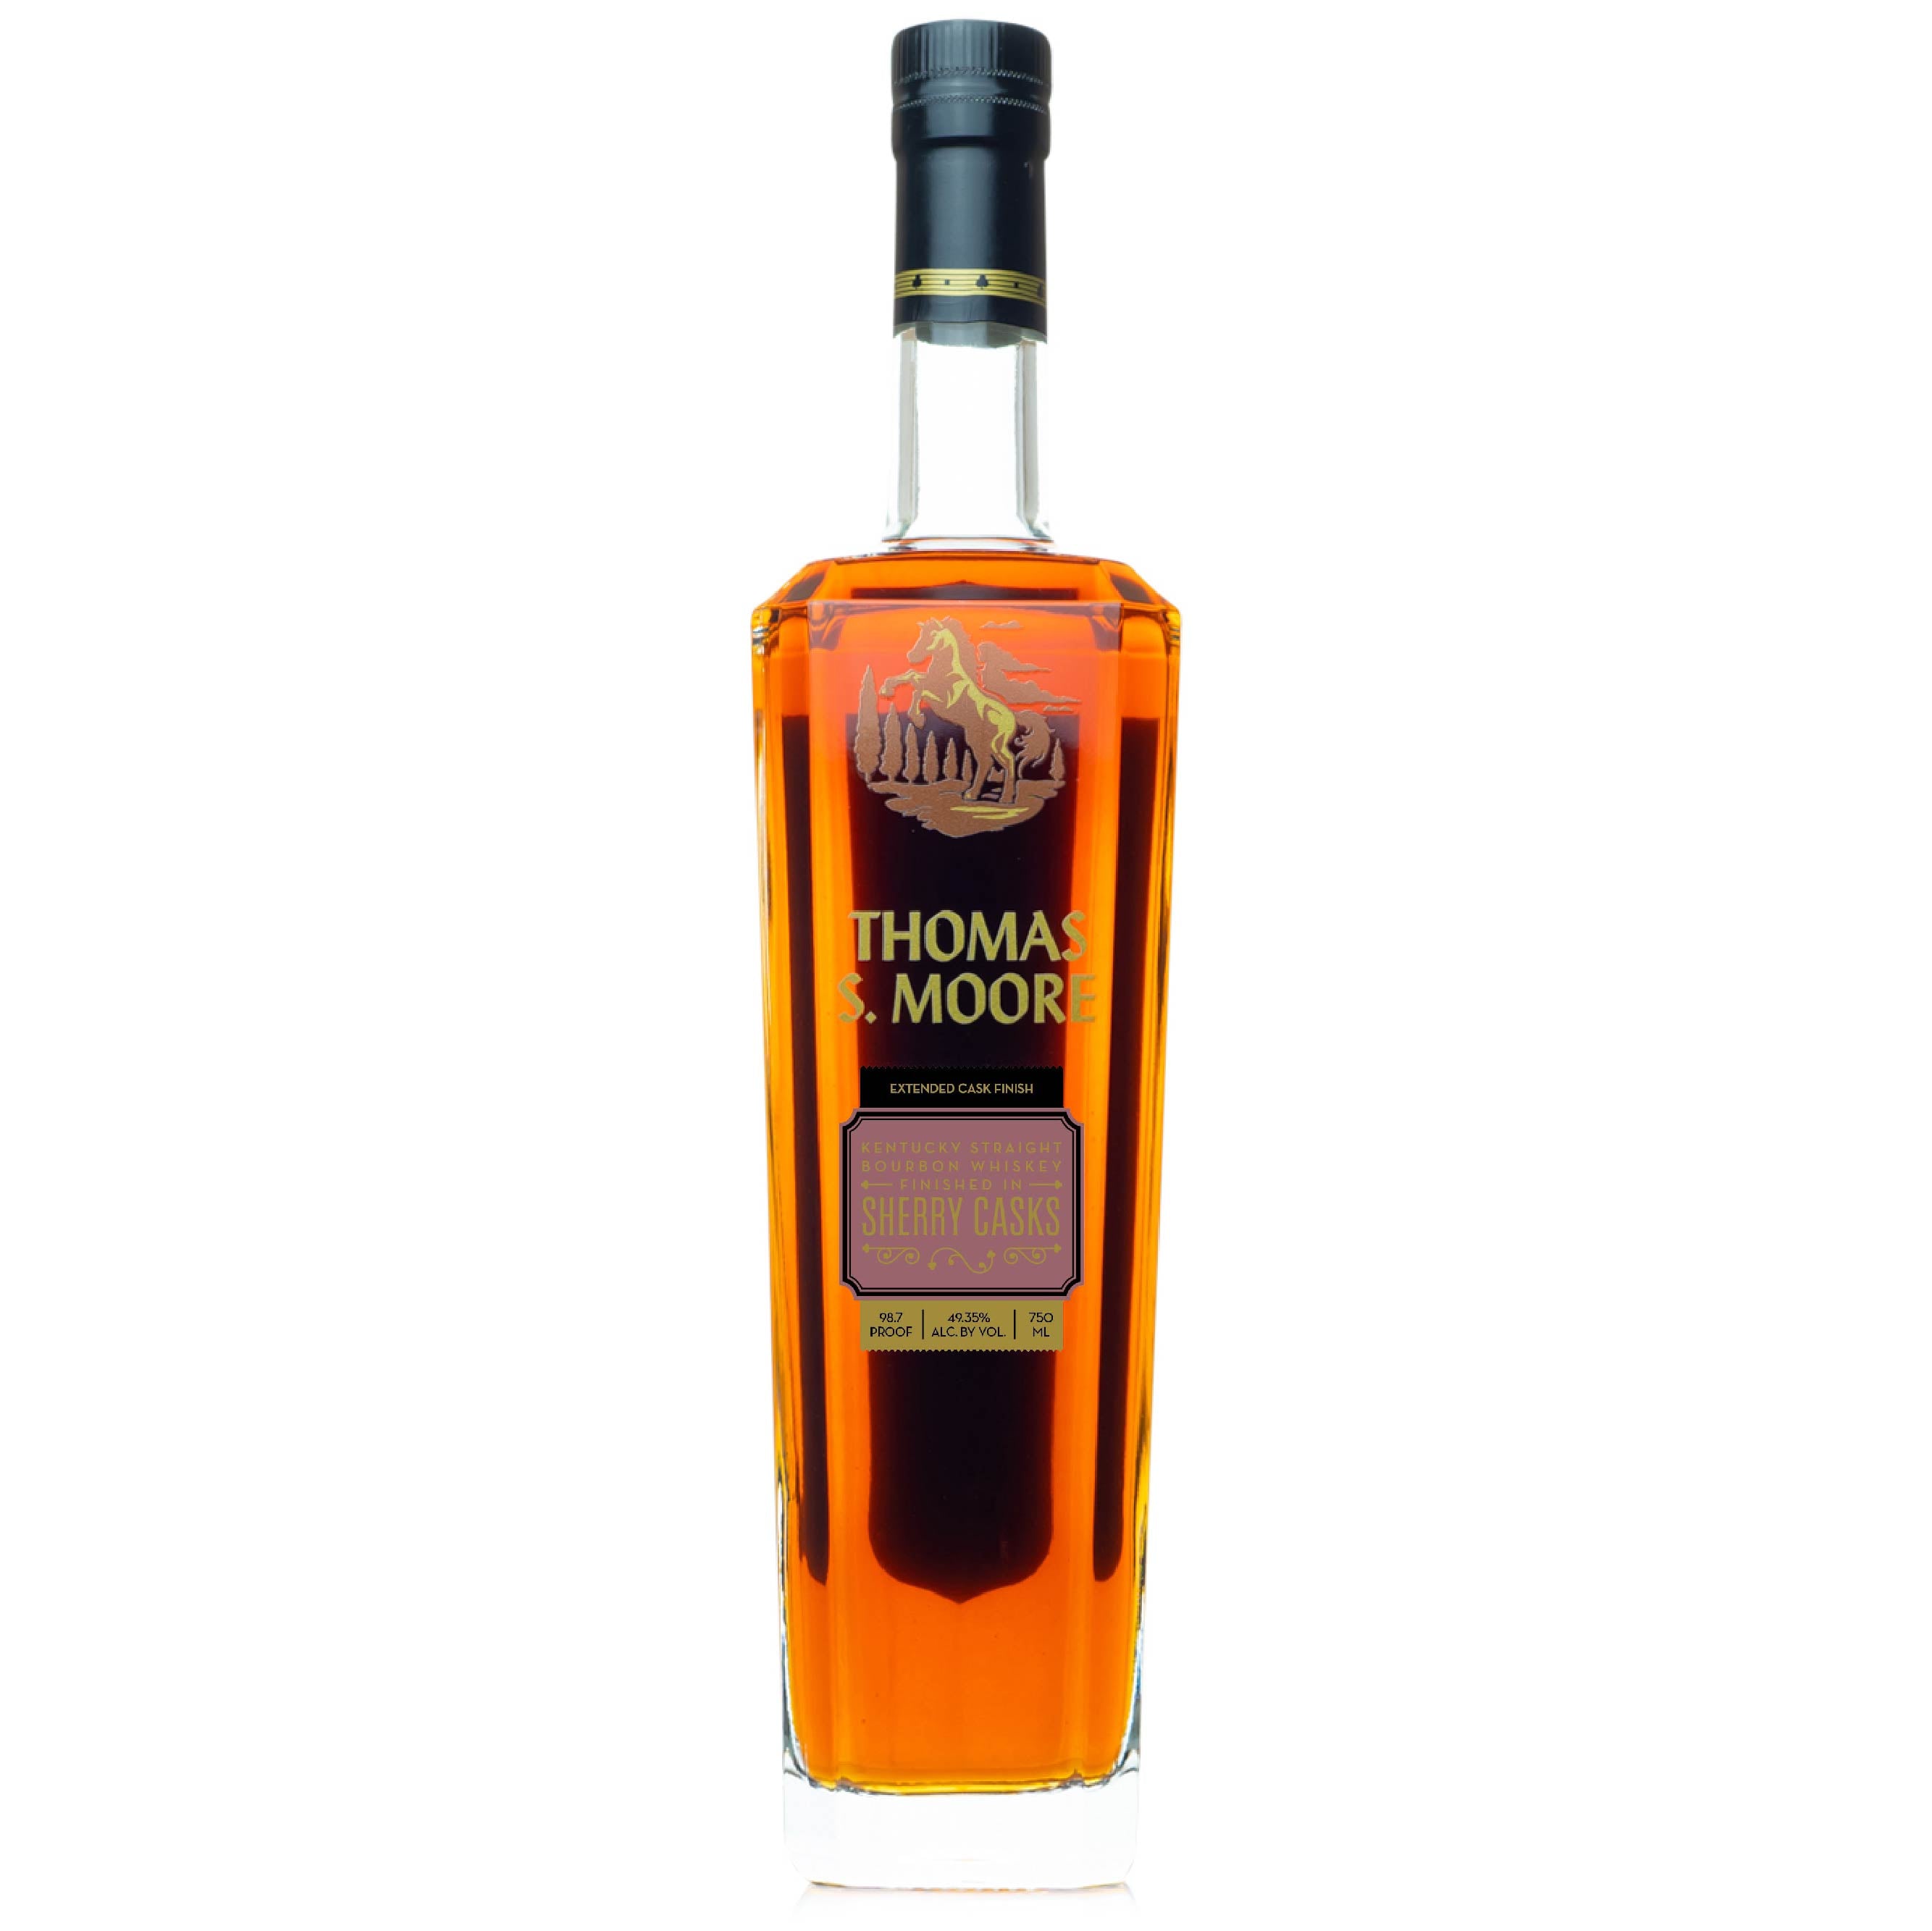 Thomas S. Moore Sherry Casks Bourbon